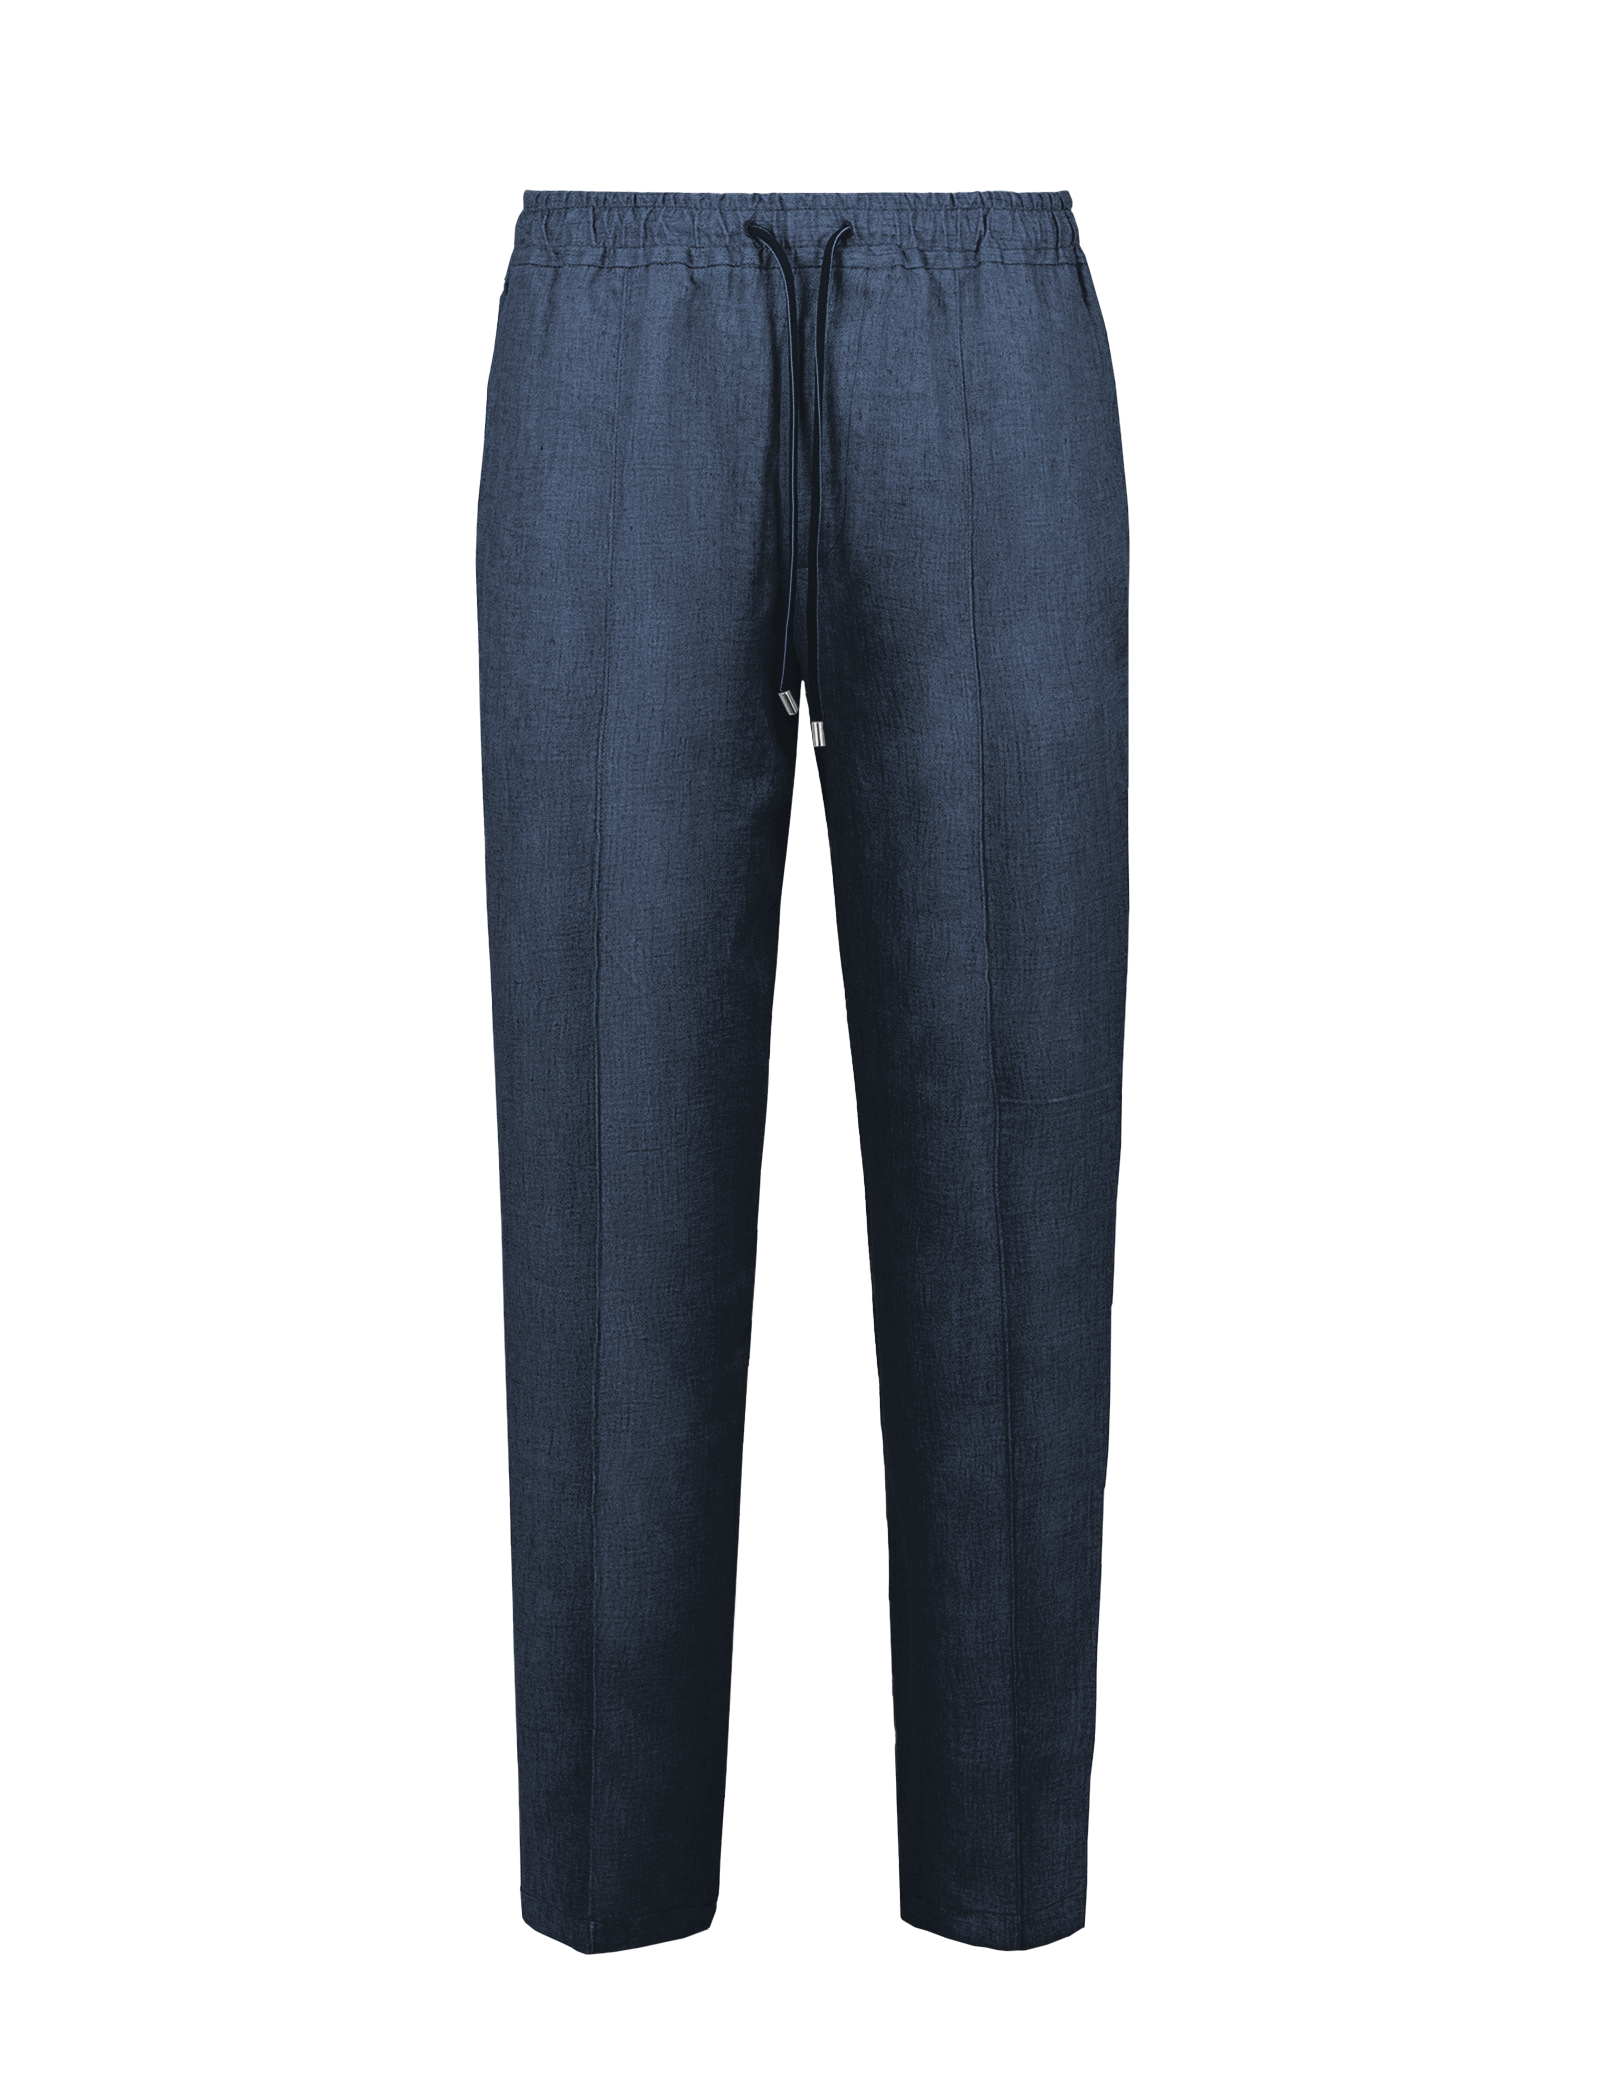 Malta Trouser Man 100 Jeans Mescal front